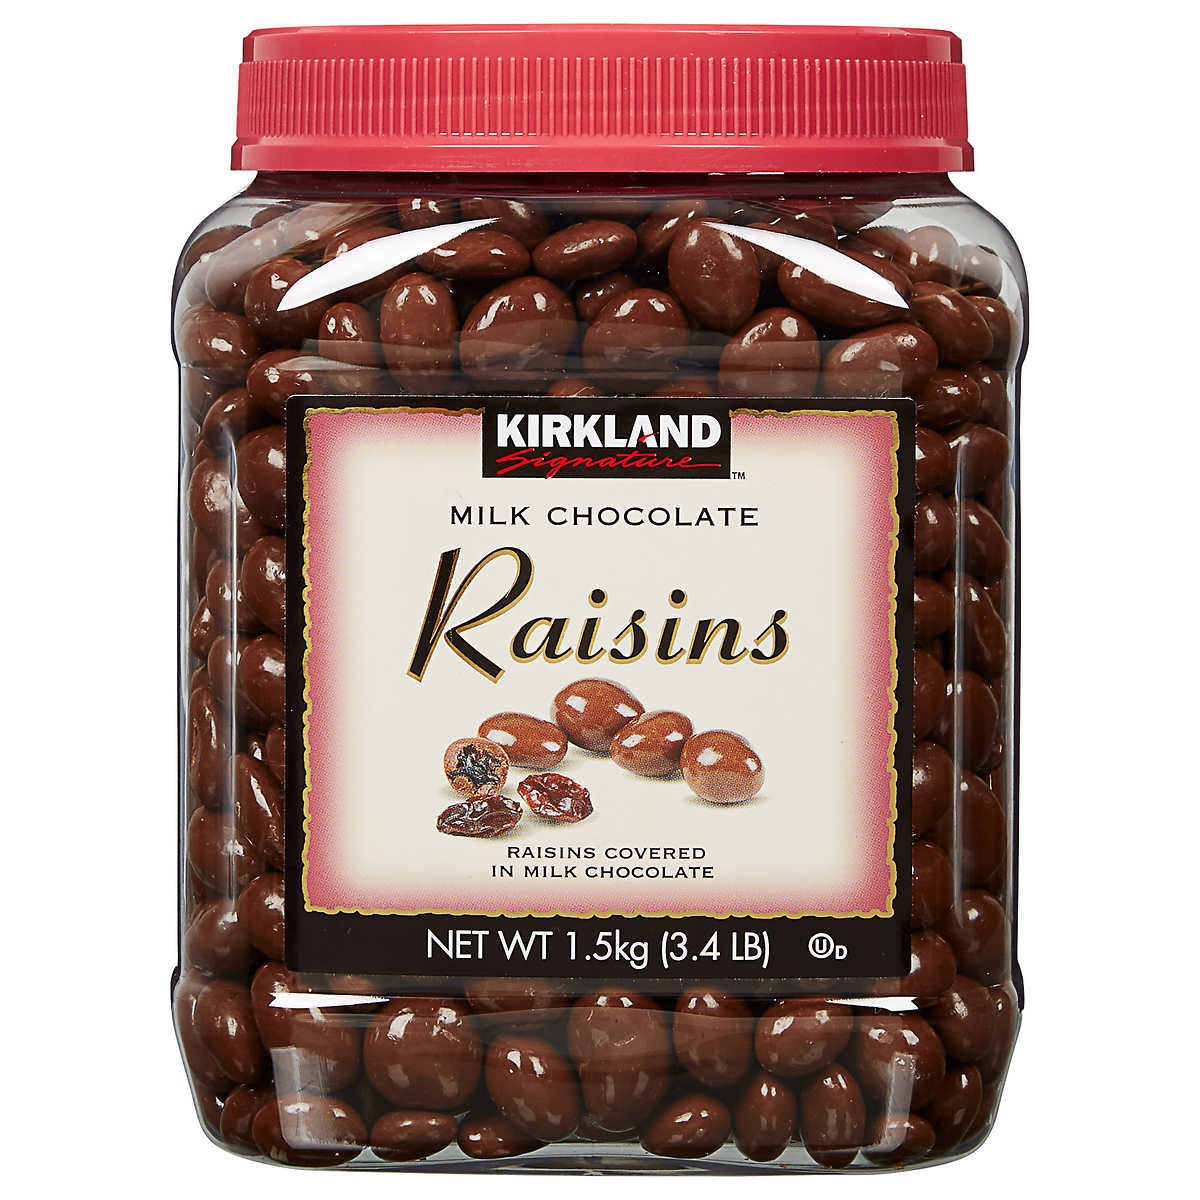 Kirkland Signature Raisins Milk Chocolate